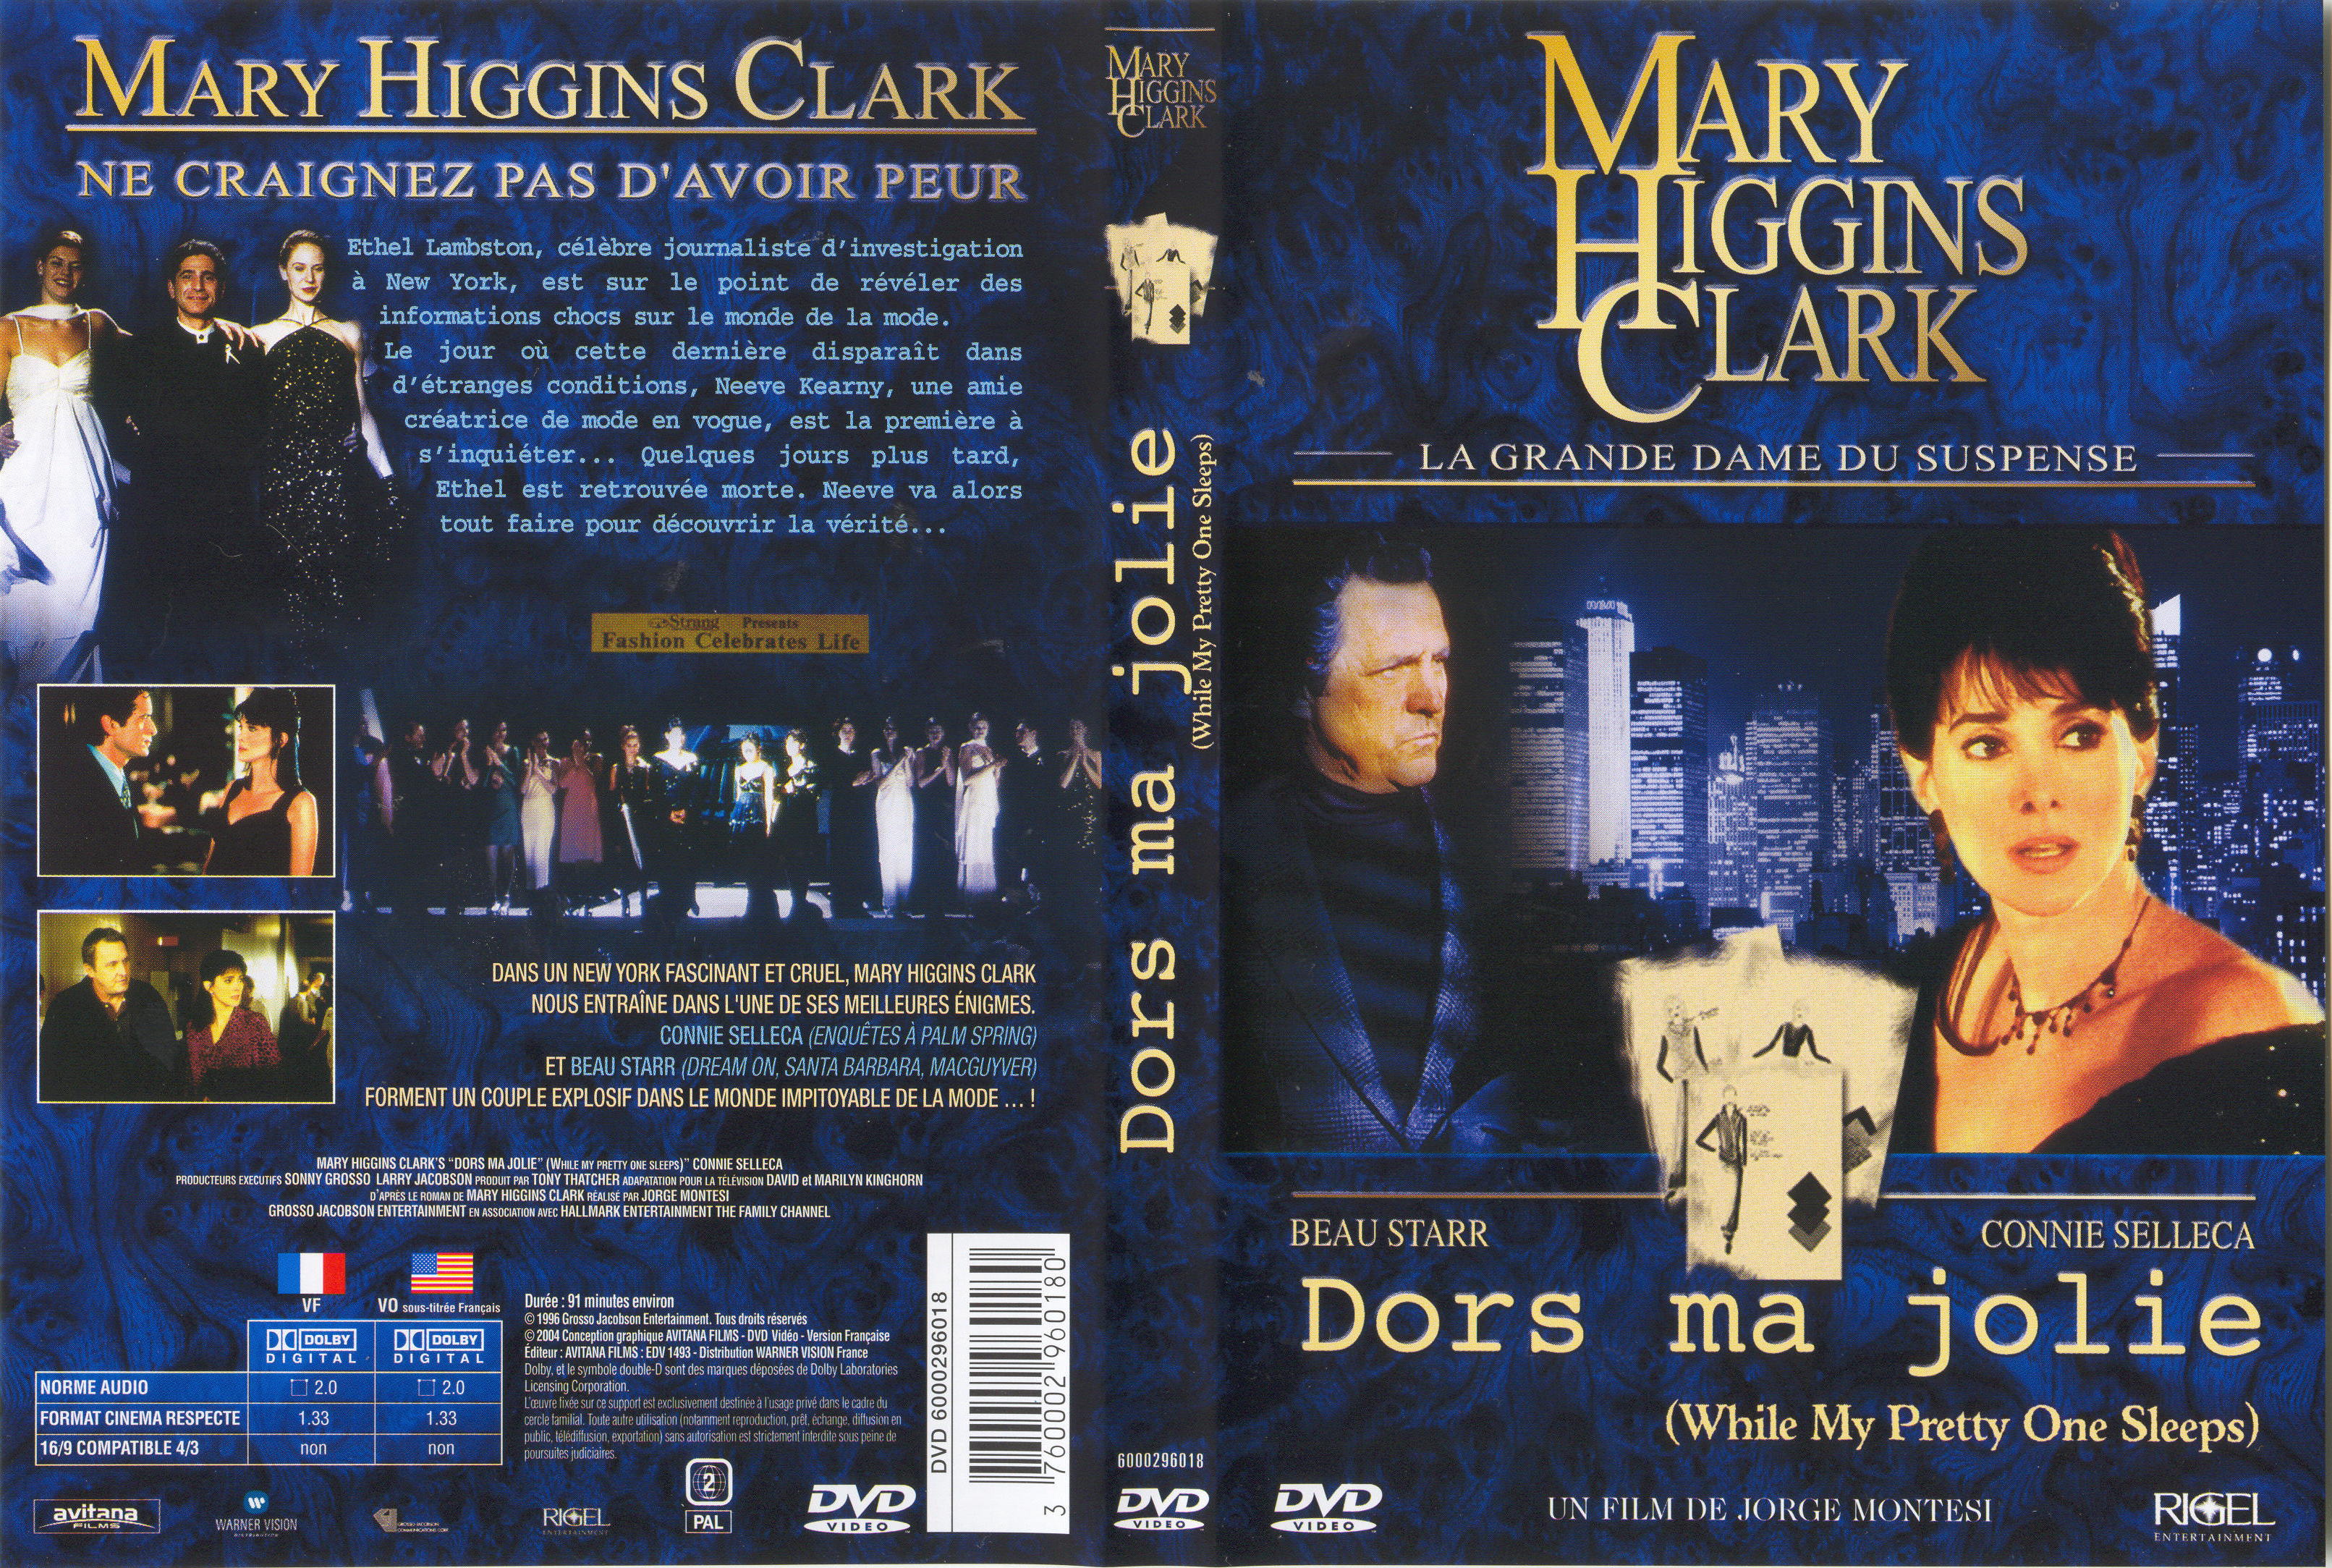 Jaquette DVD de Mary Higgins Clark - Dors ma jolie - Cinéma Passion3223 x 2167